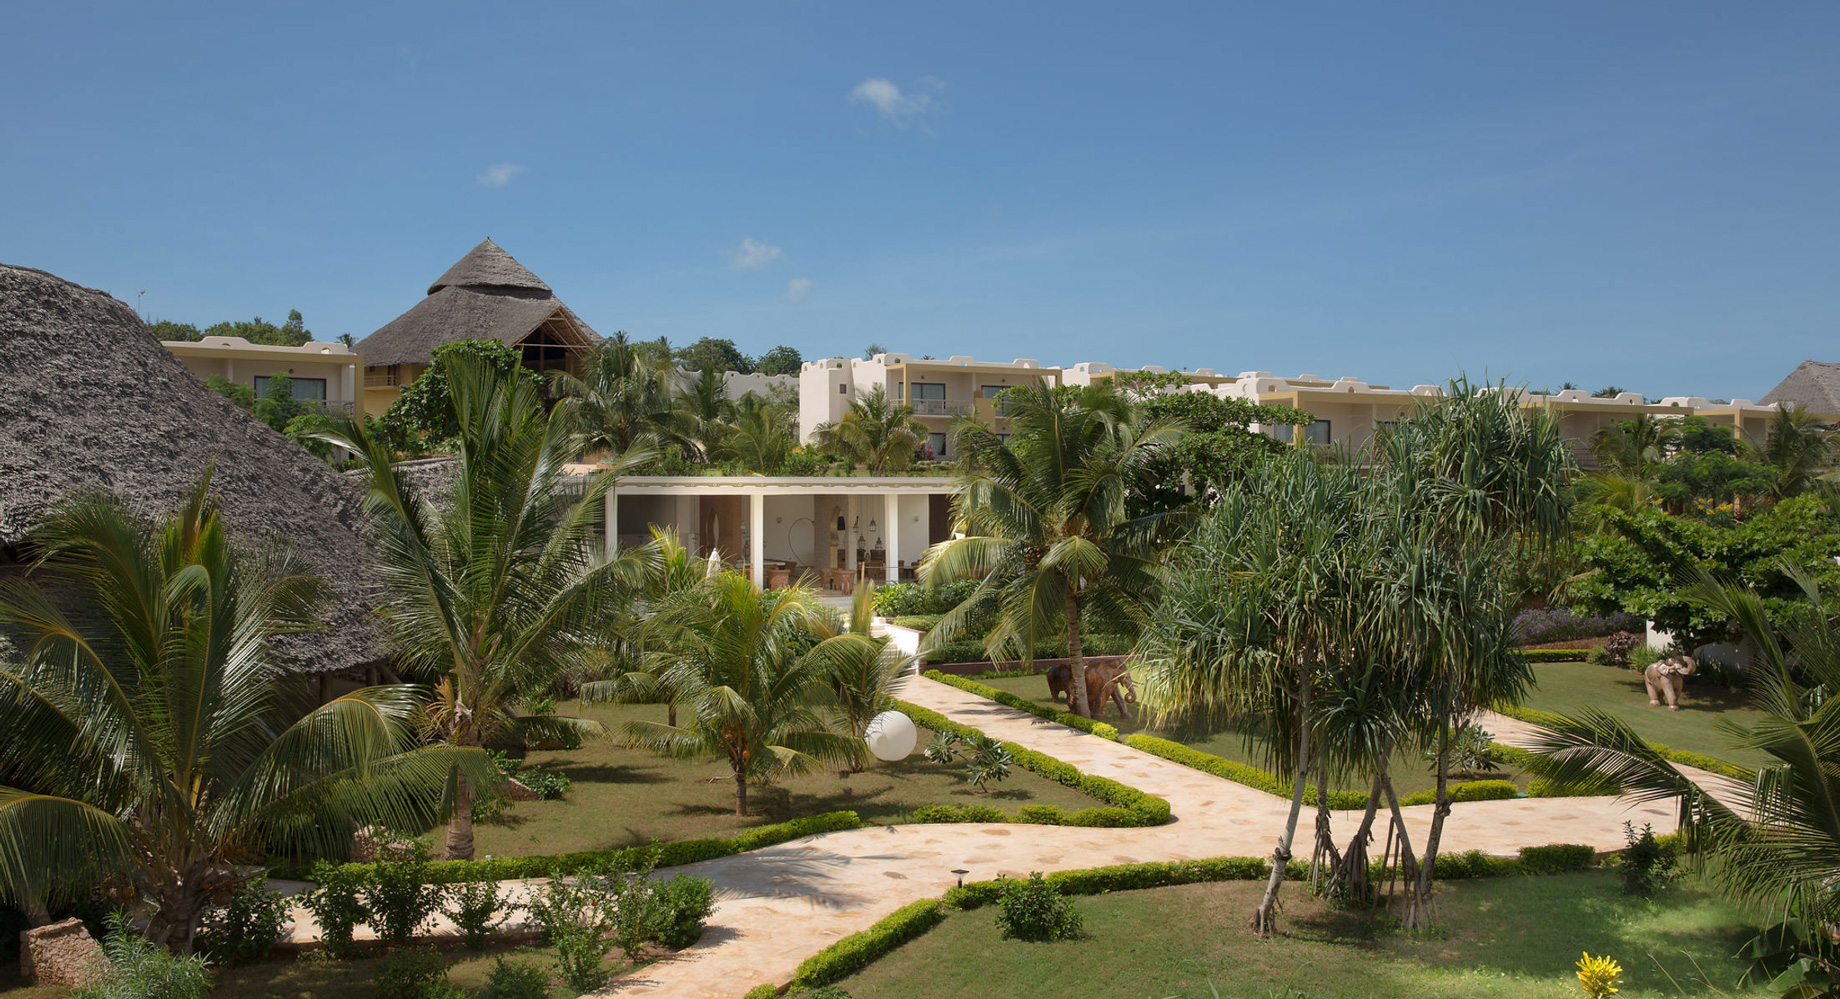 Gold Zanzibar Beach House & Spa Resort – Nungwi, Zanzibar, Tanzania – Deluxe View Rooms